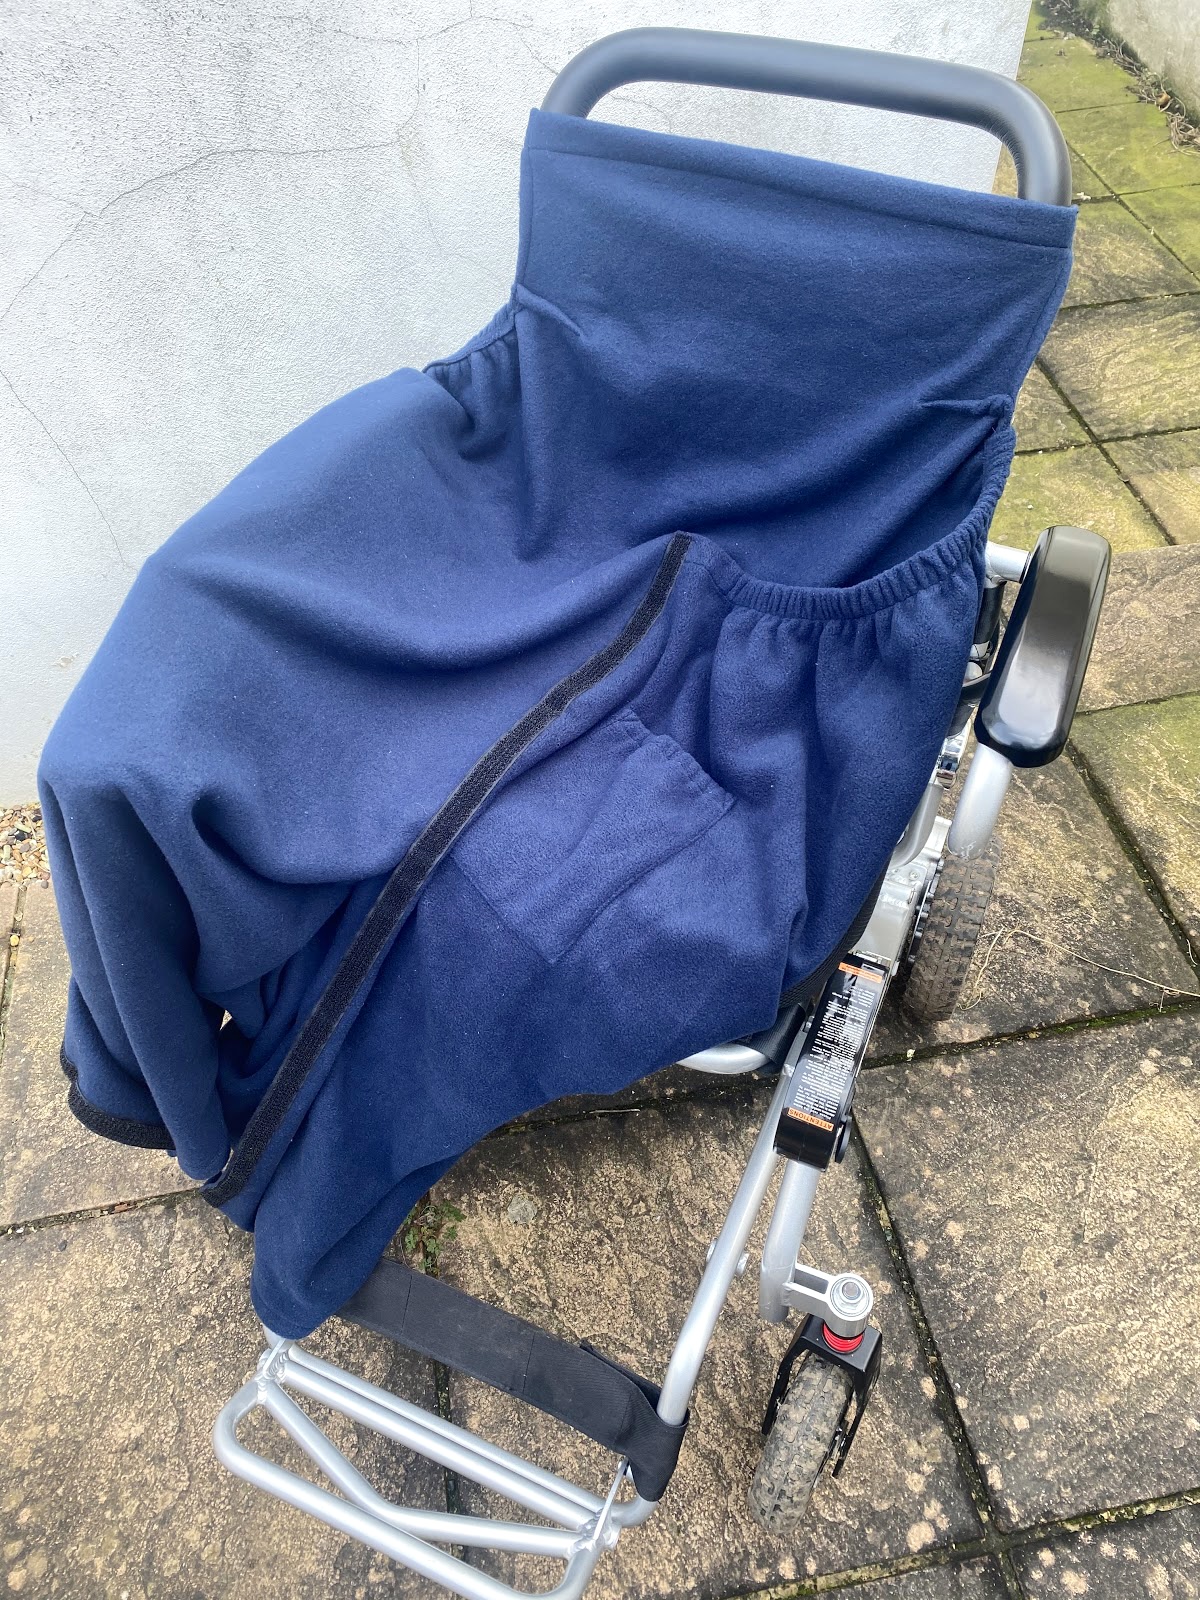 NiCosy – Wheelchair Blanket